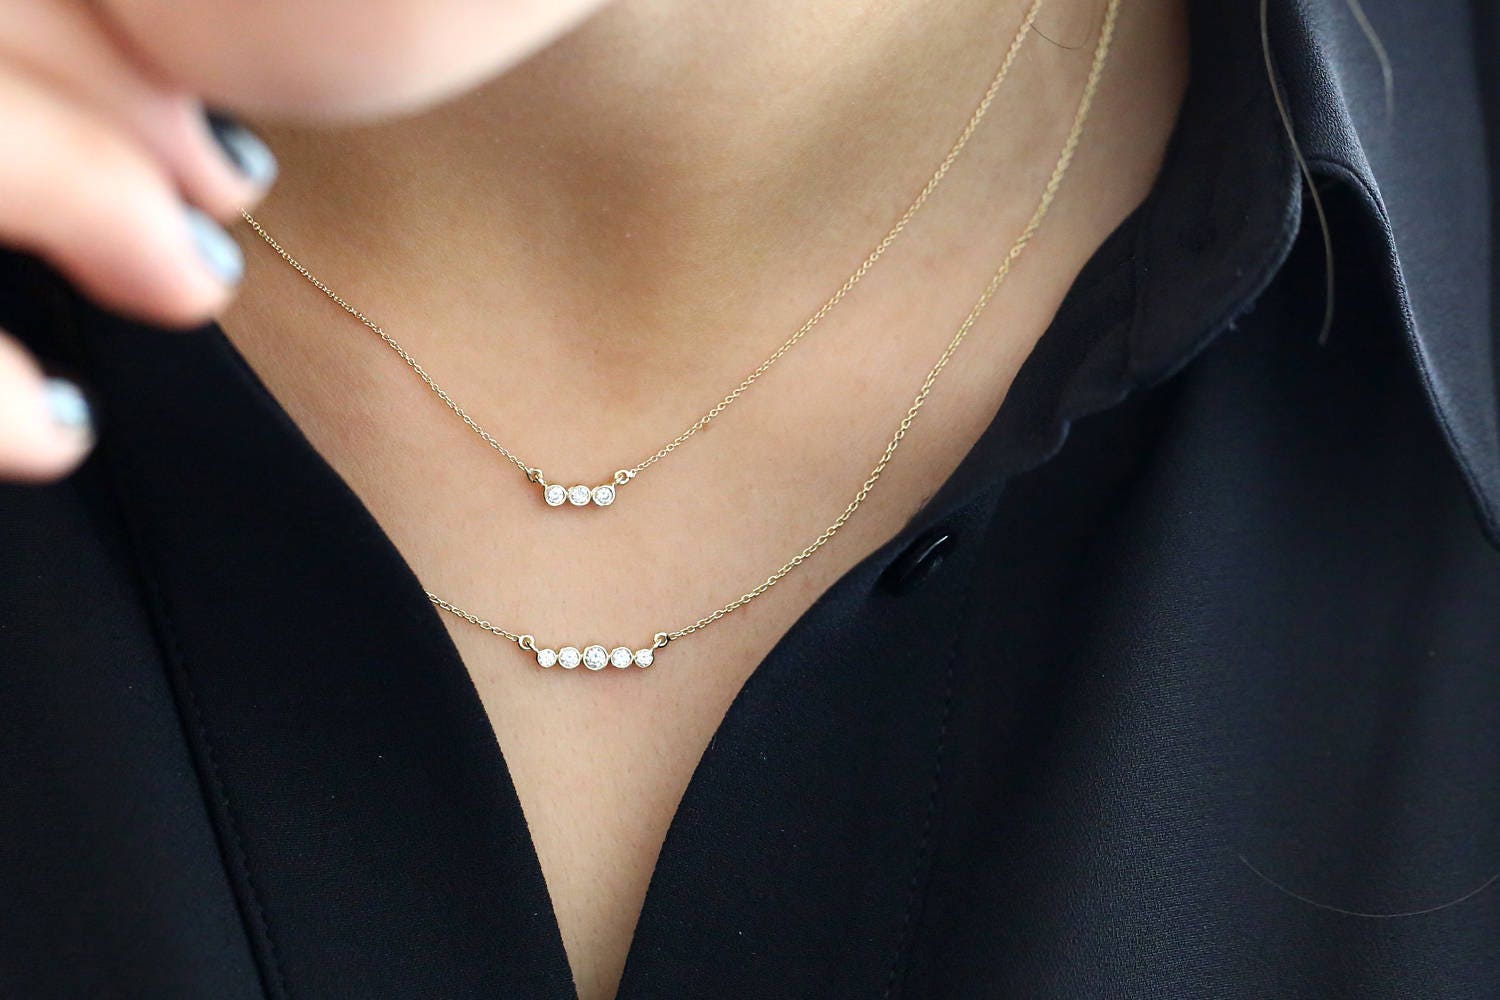 Bezel Set Diamond Necklace / 14k Gold 3 Bezel Diamond | Etsy